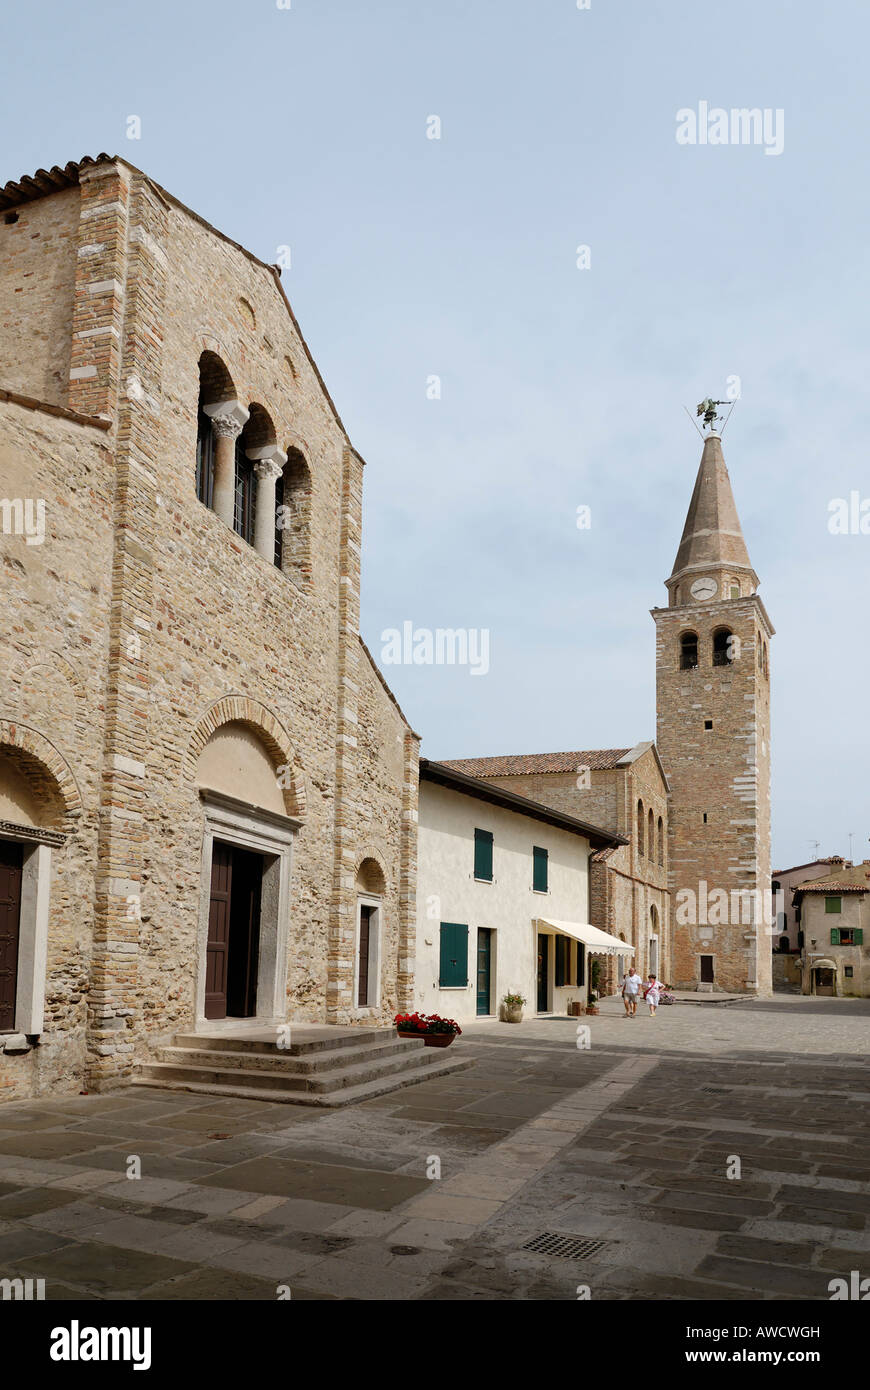 Grado at the adriatic sea Friuli Venezia Giulia Italy basilica St. Eufemia Stock Photo